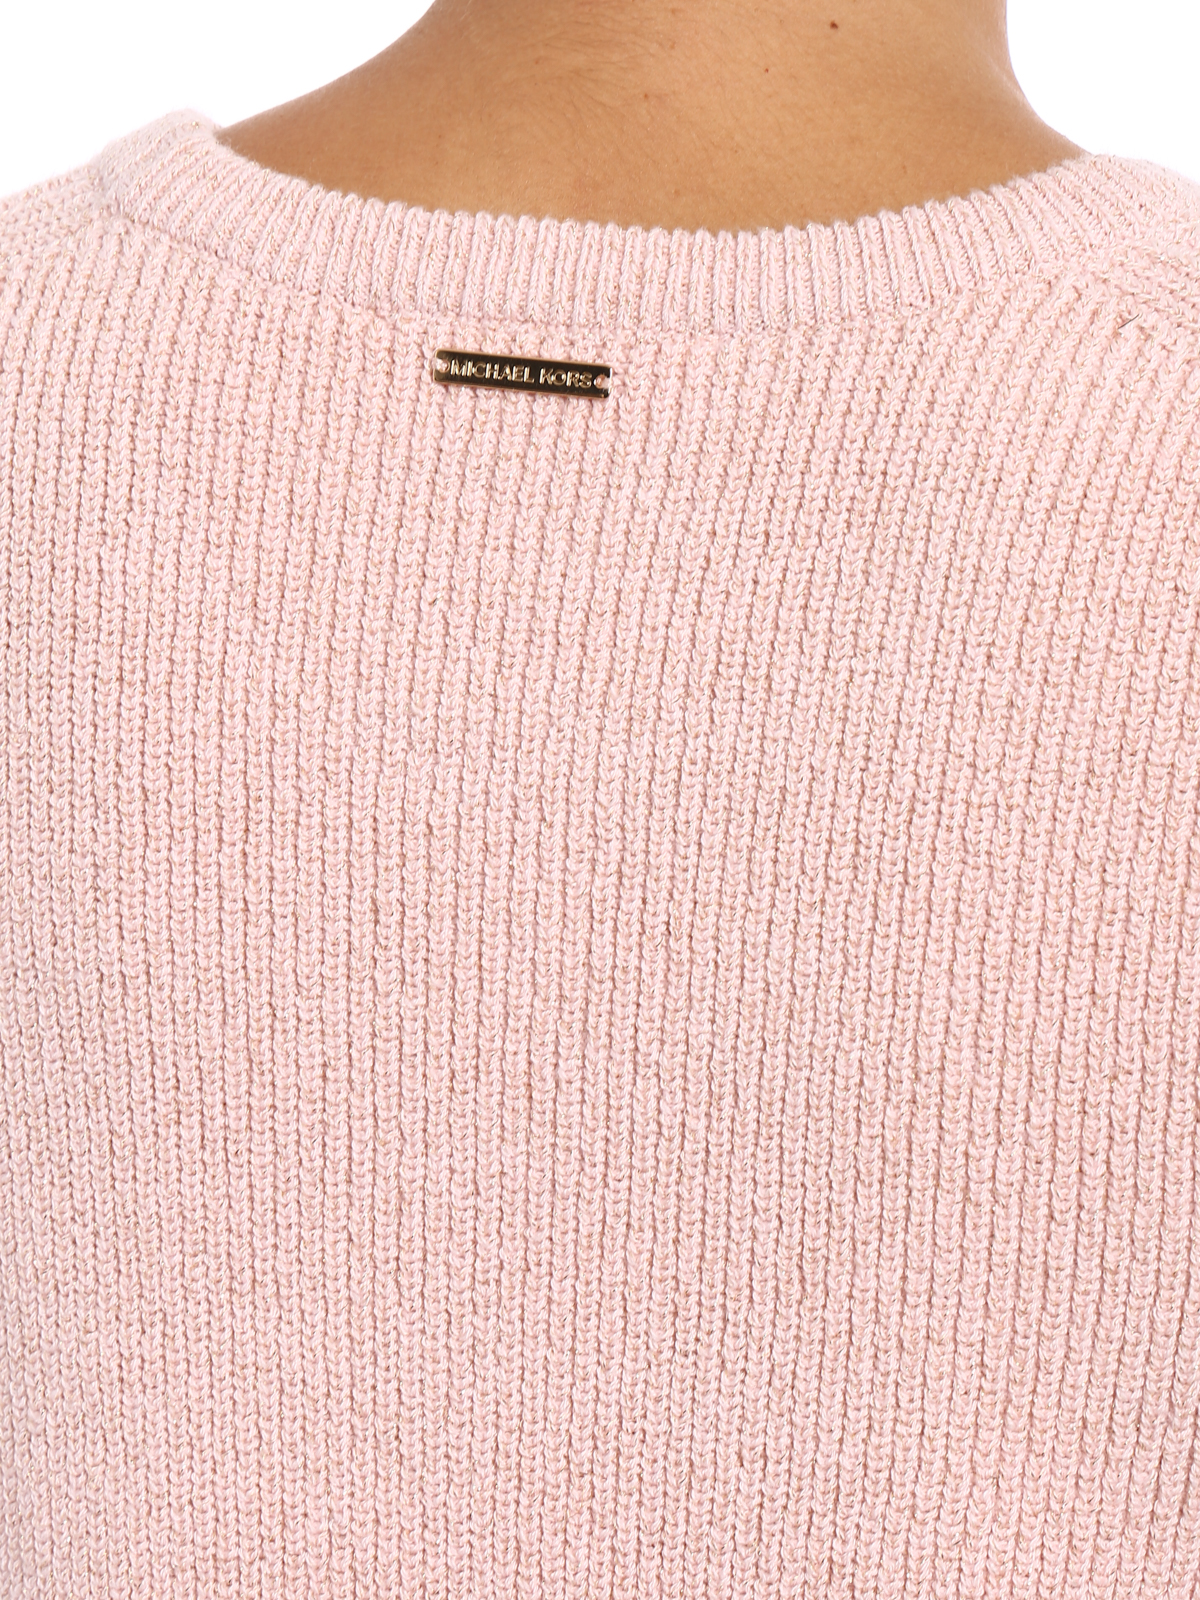 michael kors pink sweater